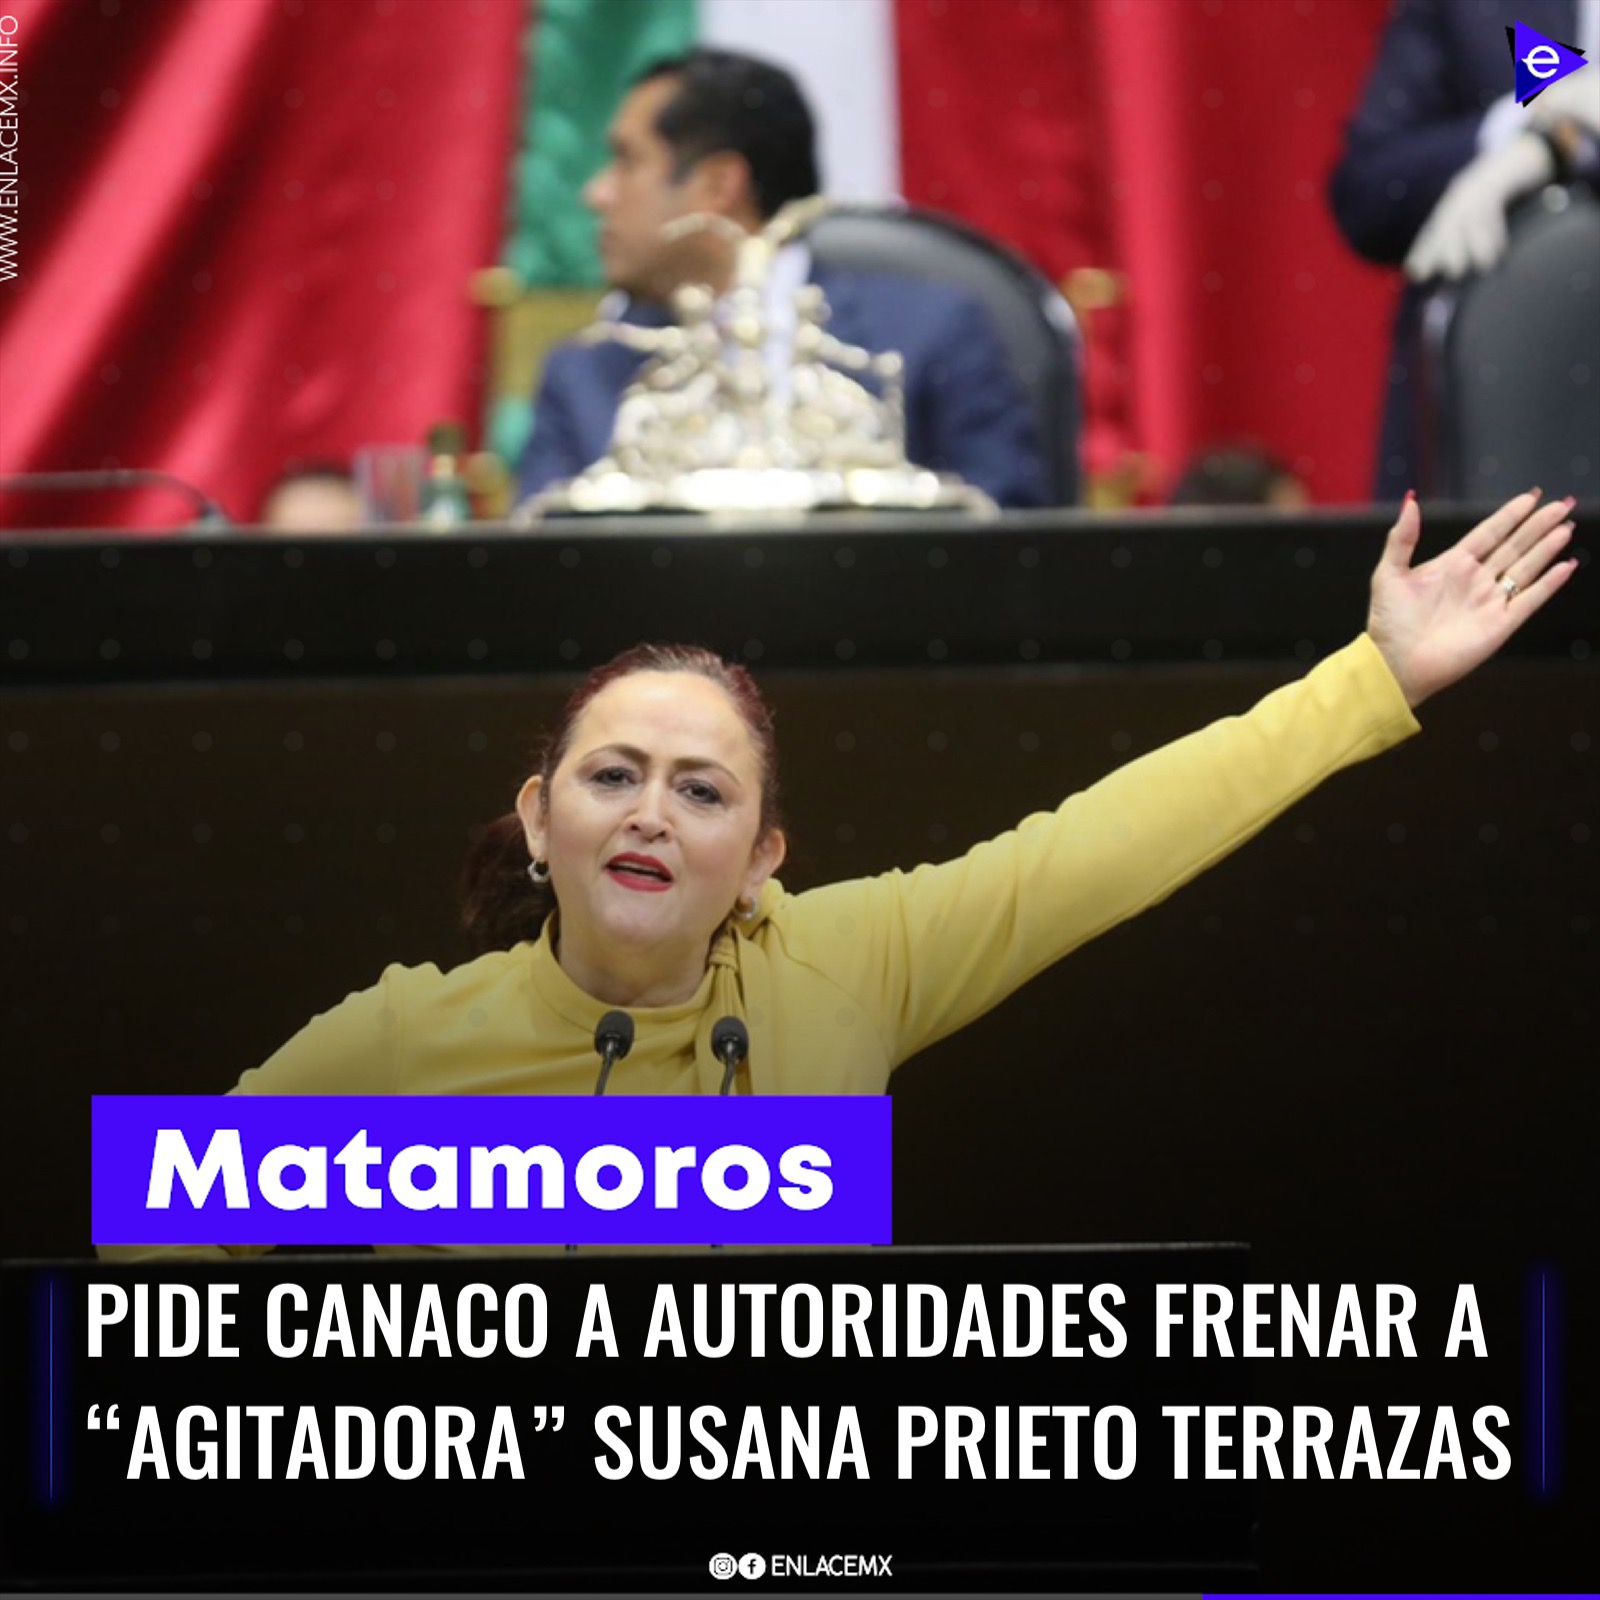 Exige Canaco a autoridades frenar a “la agitadora” Susana Prieto Terrazas